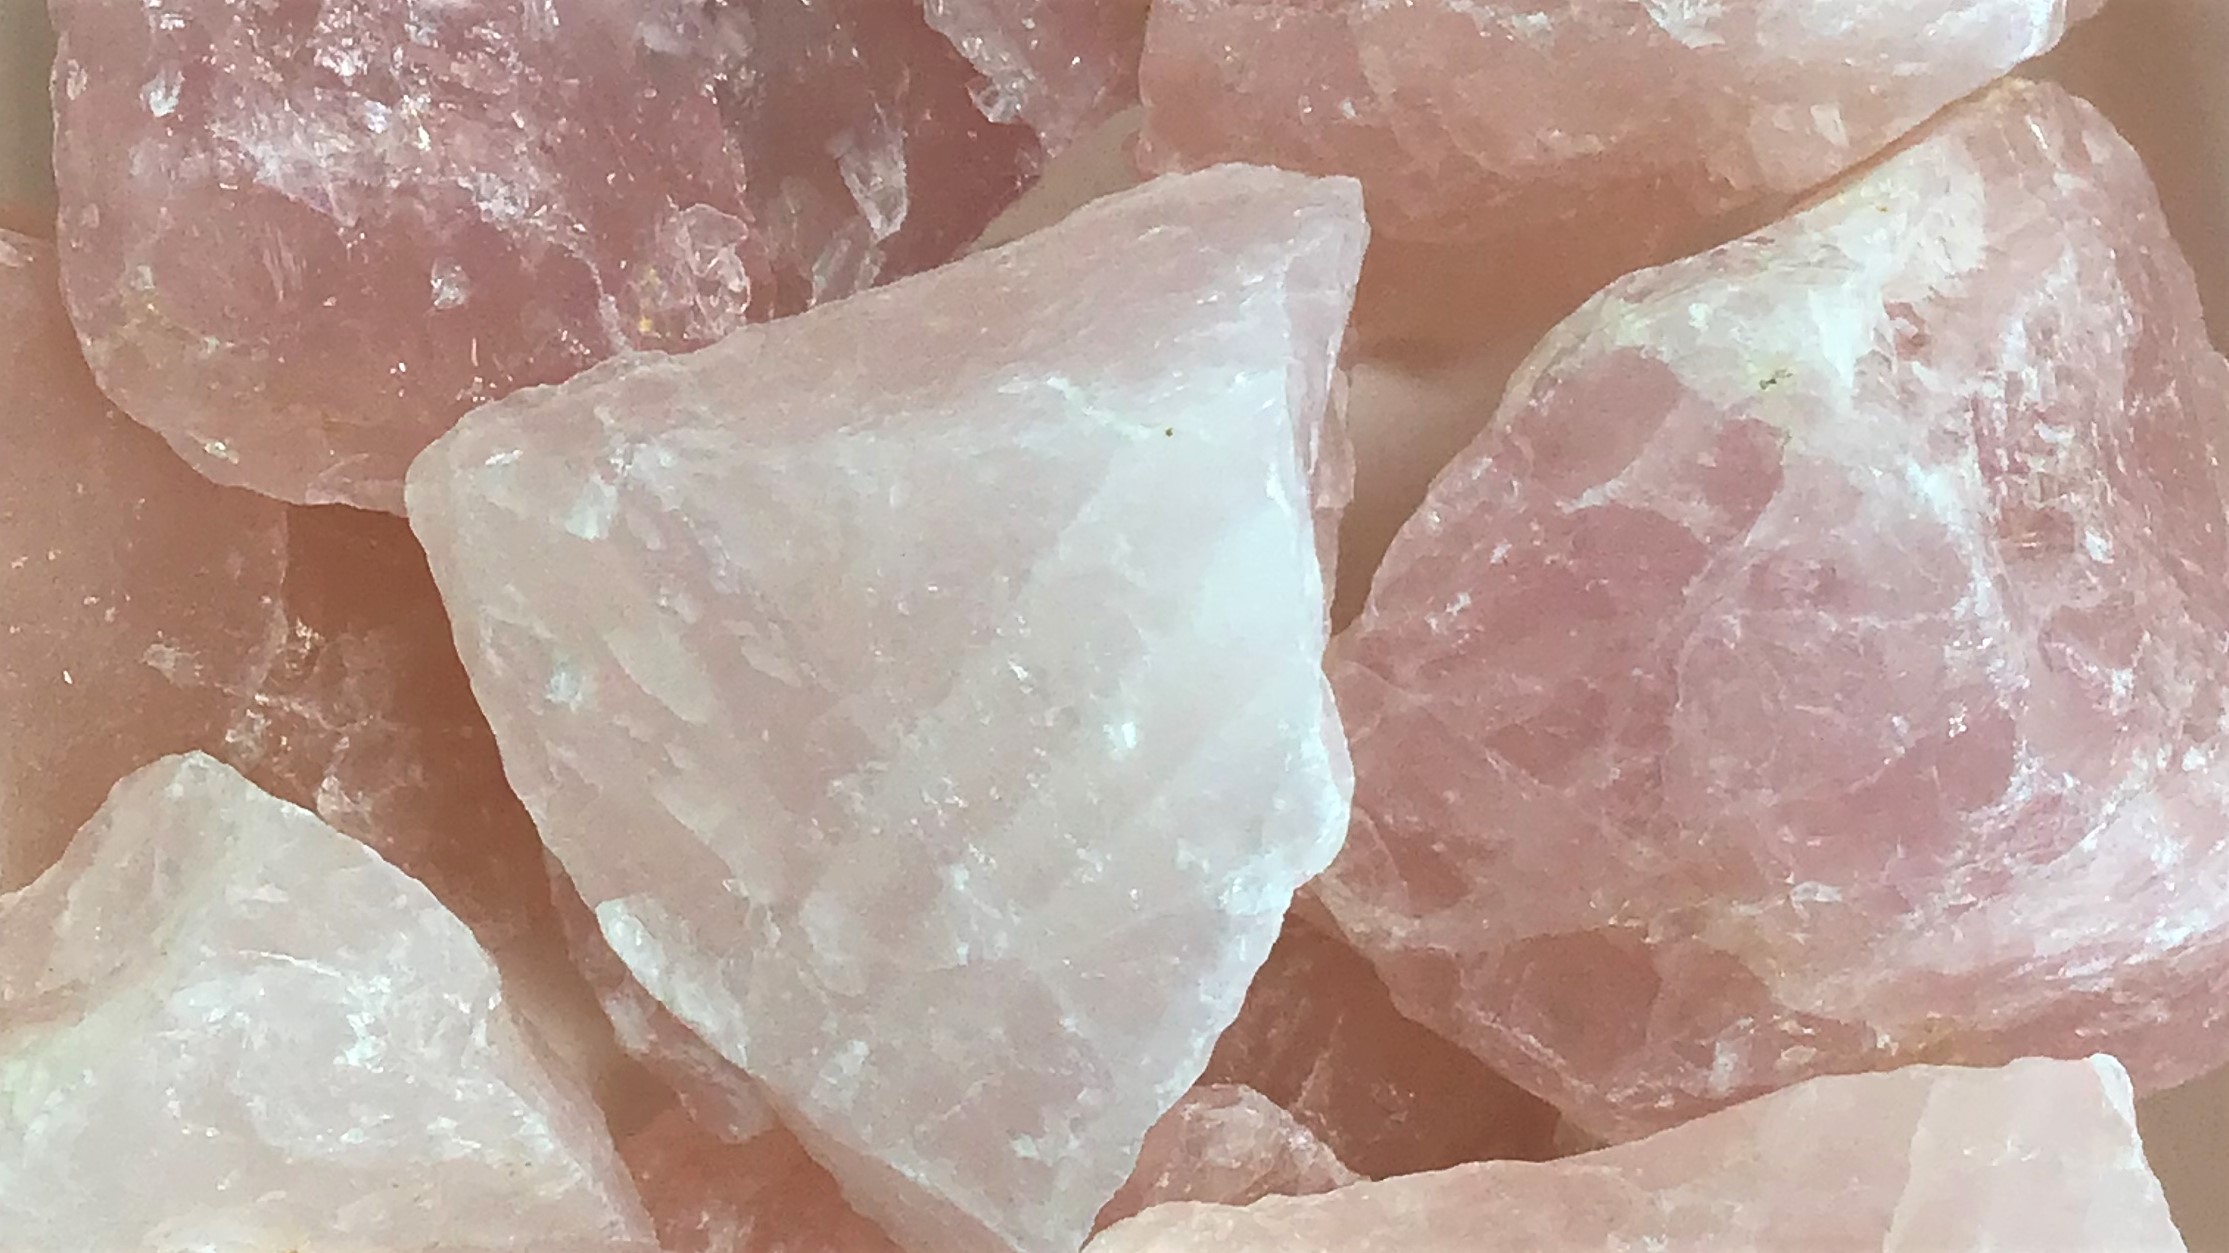 click to shop all rose quartz